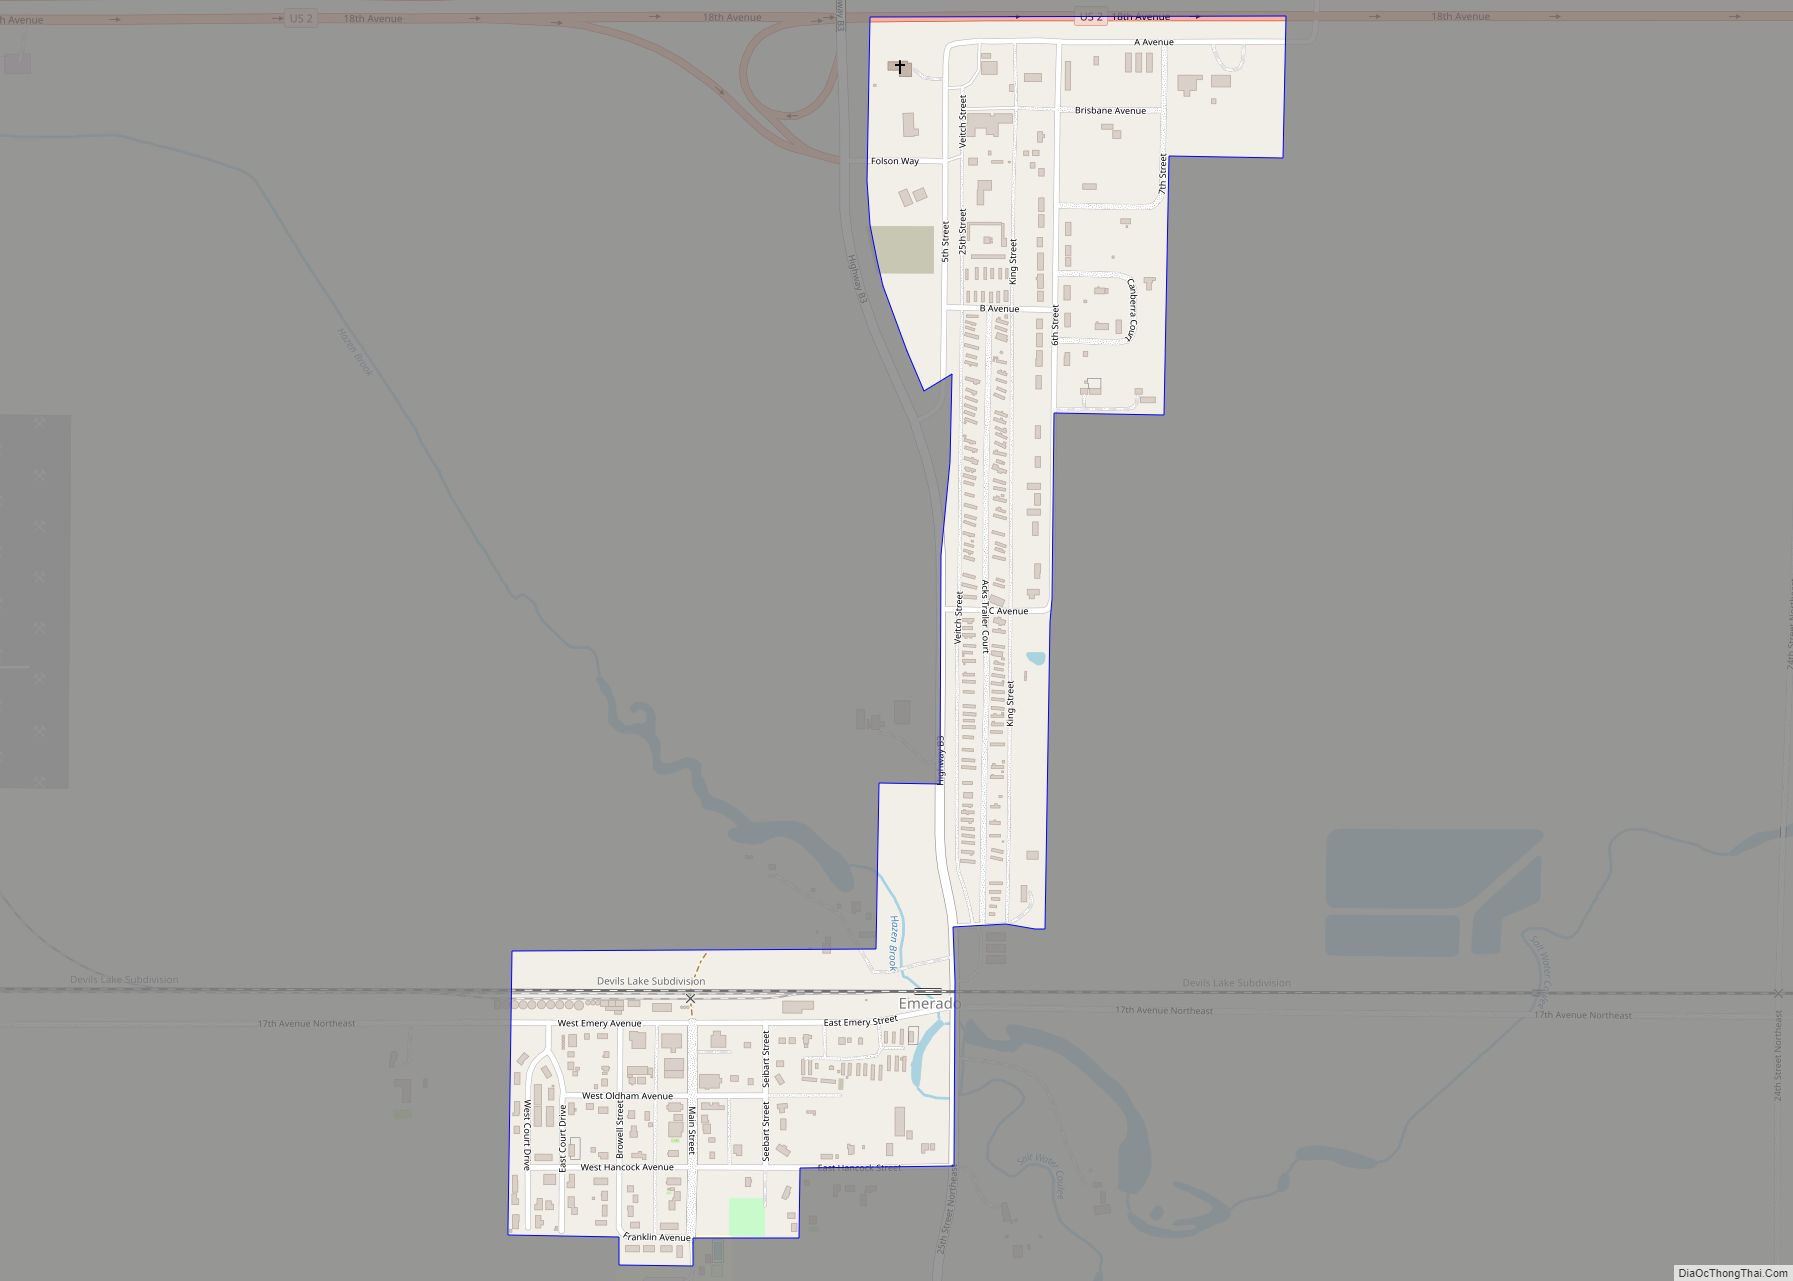 Map of Emerado city